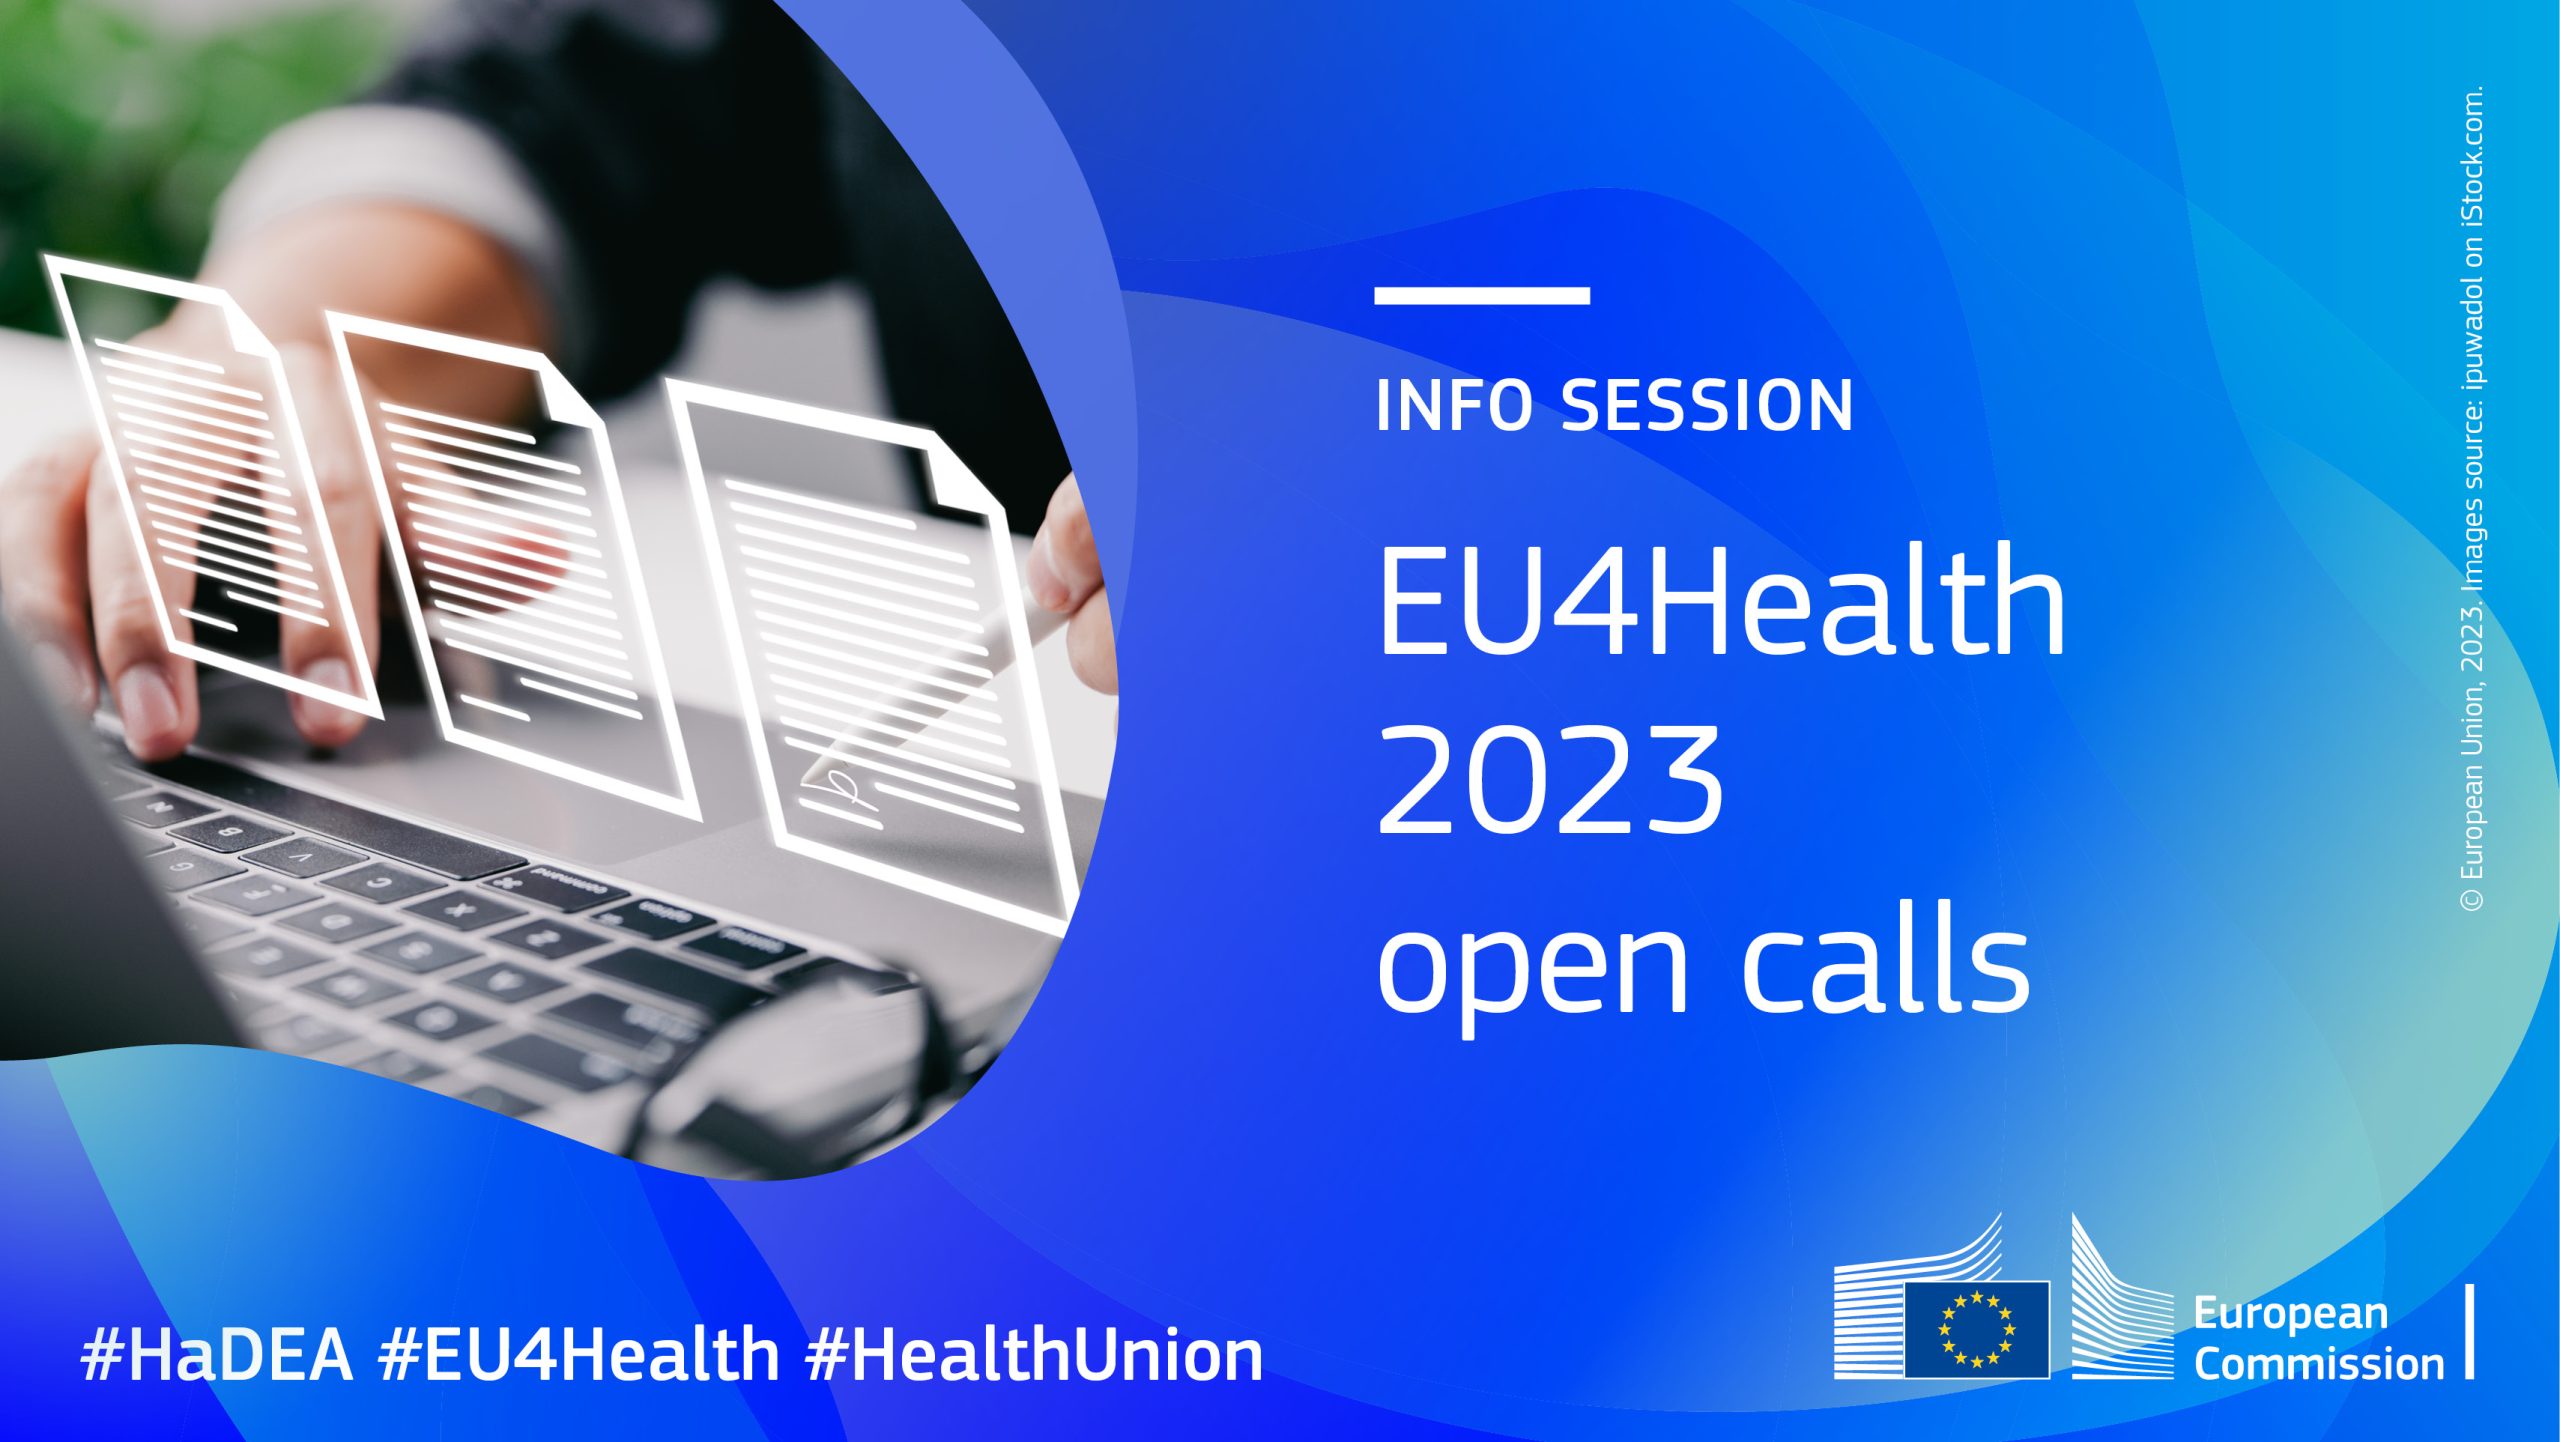 Info session: EU4Health 2023 open calls